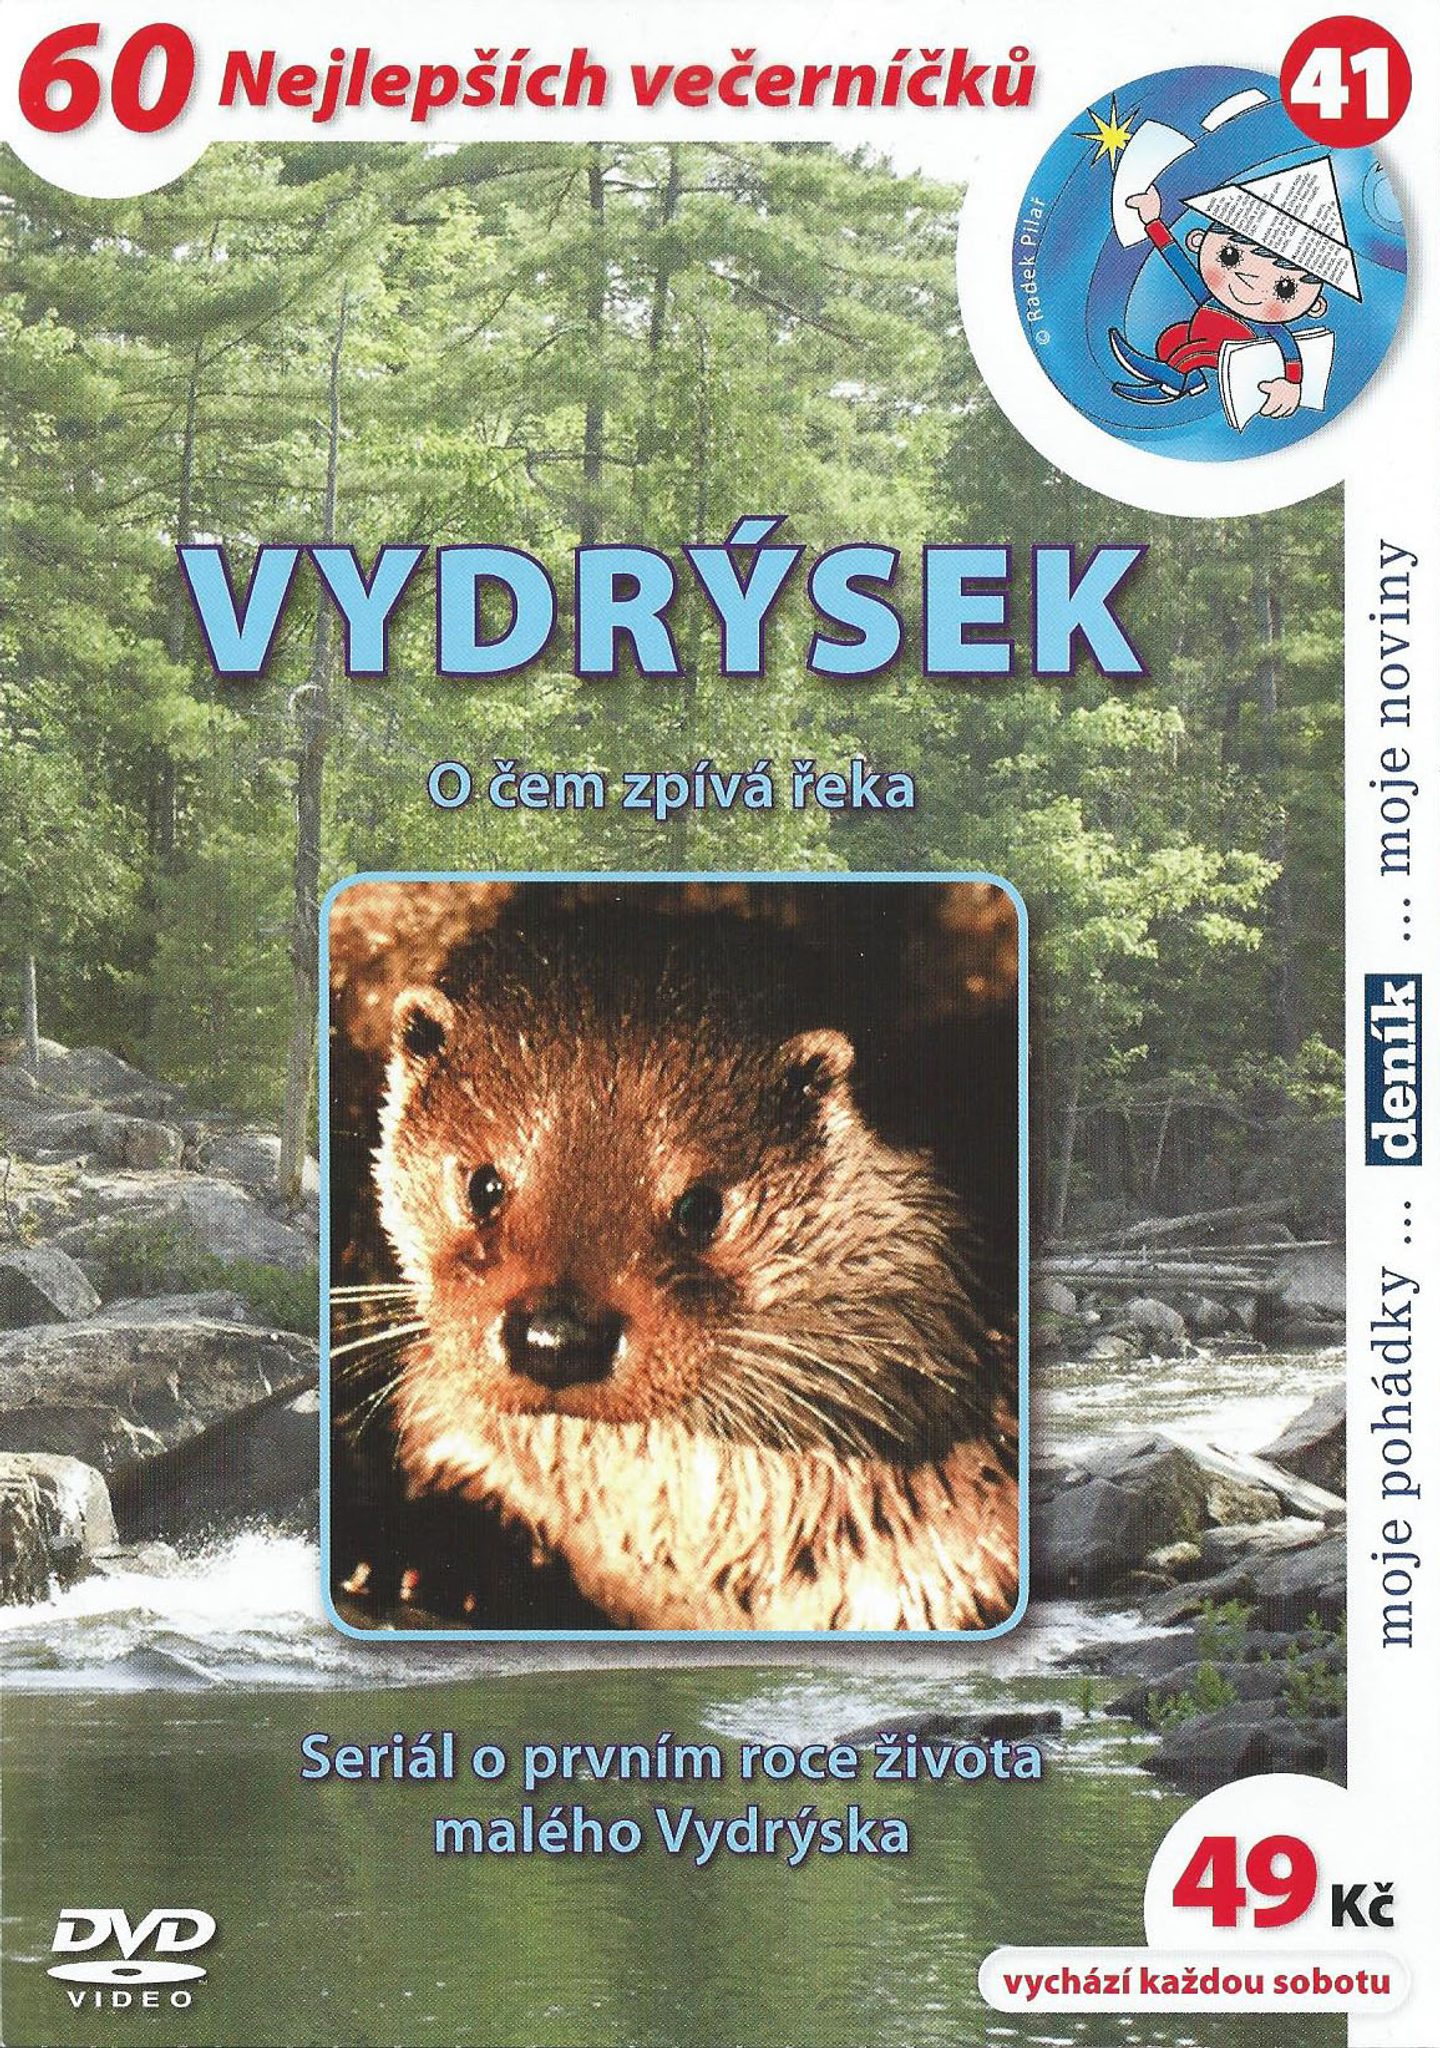 DVD Vydrsek - Kliknutm na obrzek zavete